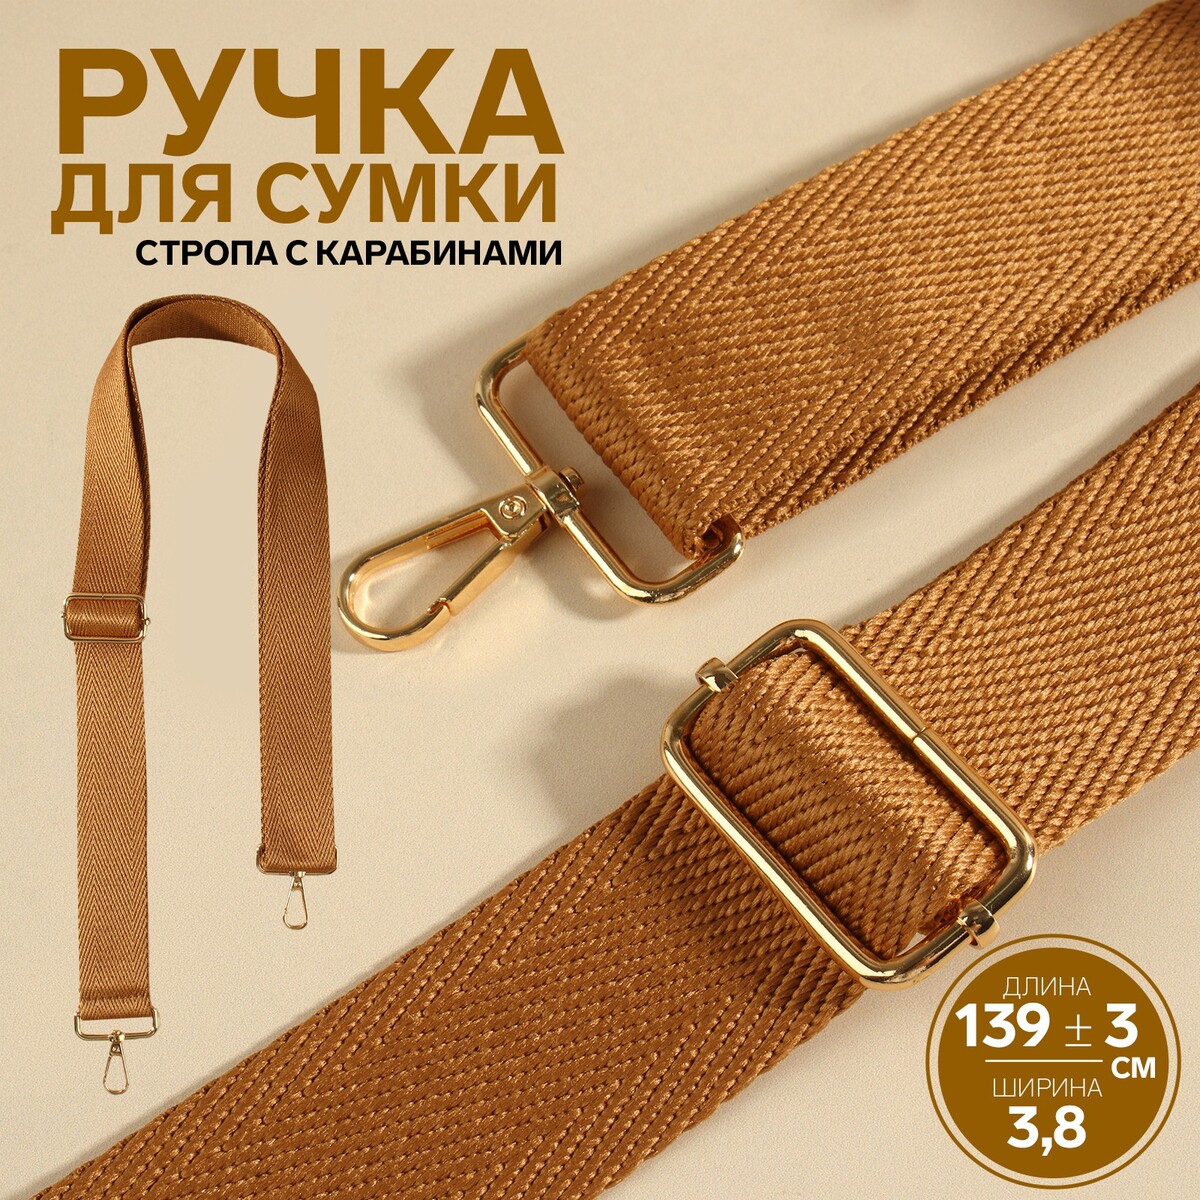 Ручка для сумки, стропа, с карабинами, 139 ± 3 × 3,8 см, цвет светло-коричневый ручка для сумки стропа с карабинами 139 ± 3 × 3 8 см светло коричневый